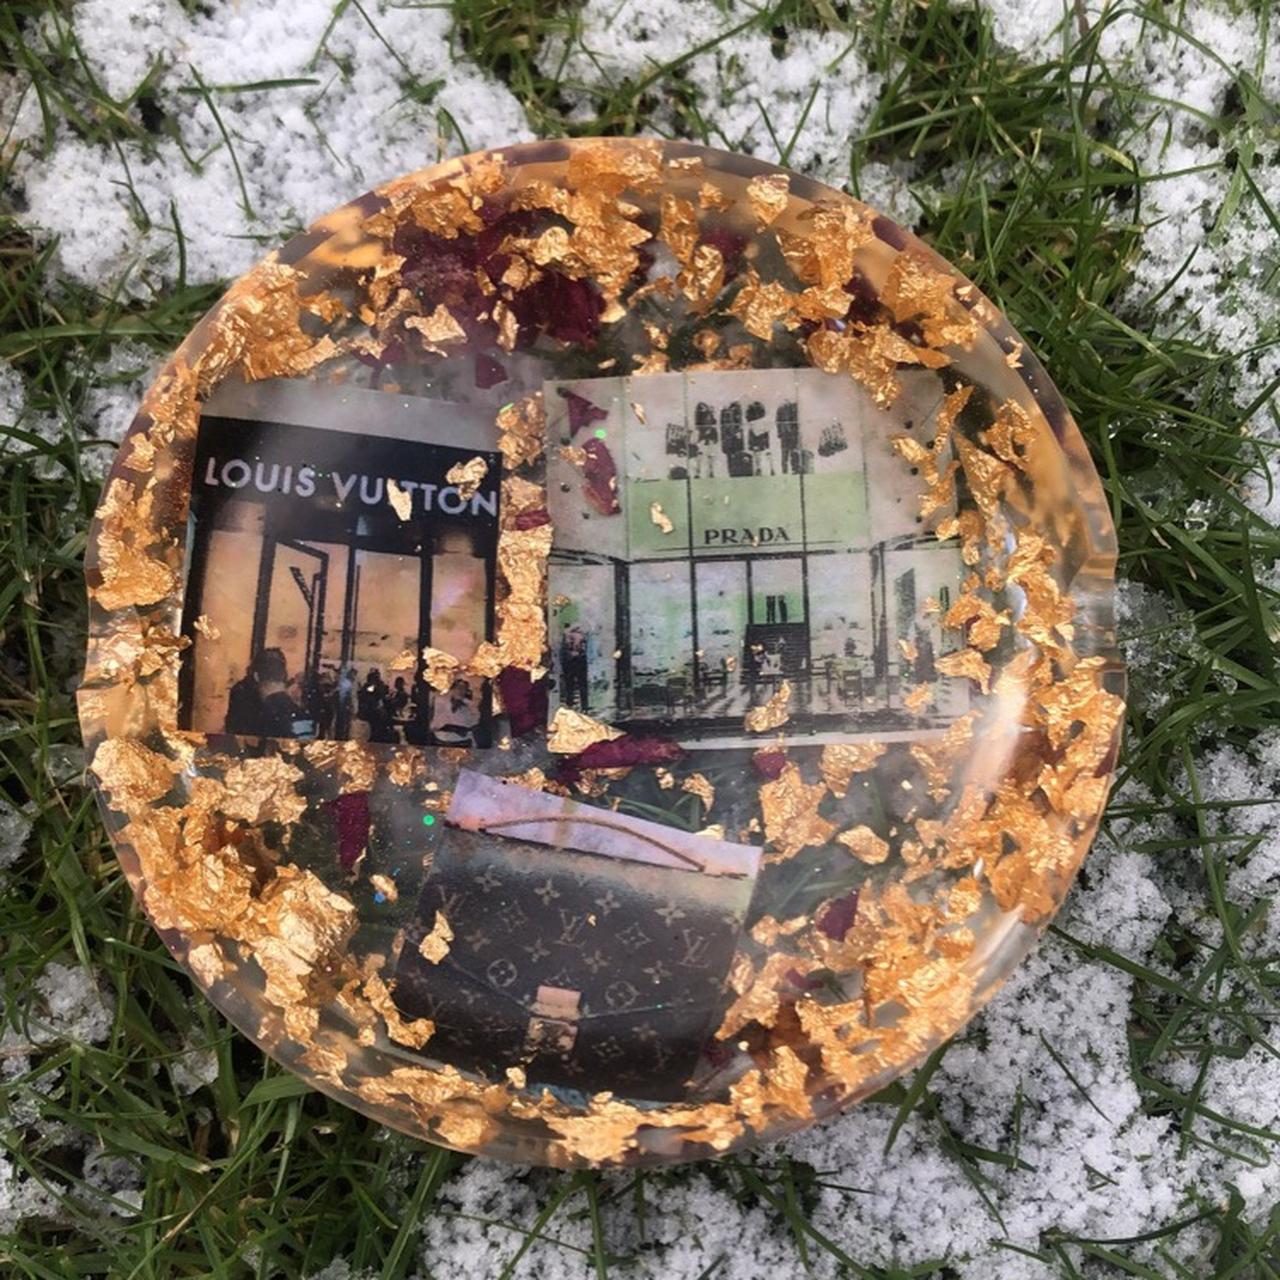 Designer ashtray !! PRADA LOUIS VUITTON ❤️ Gold leaf - Depop